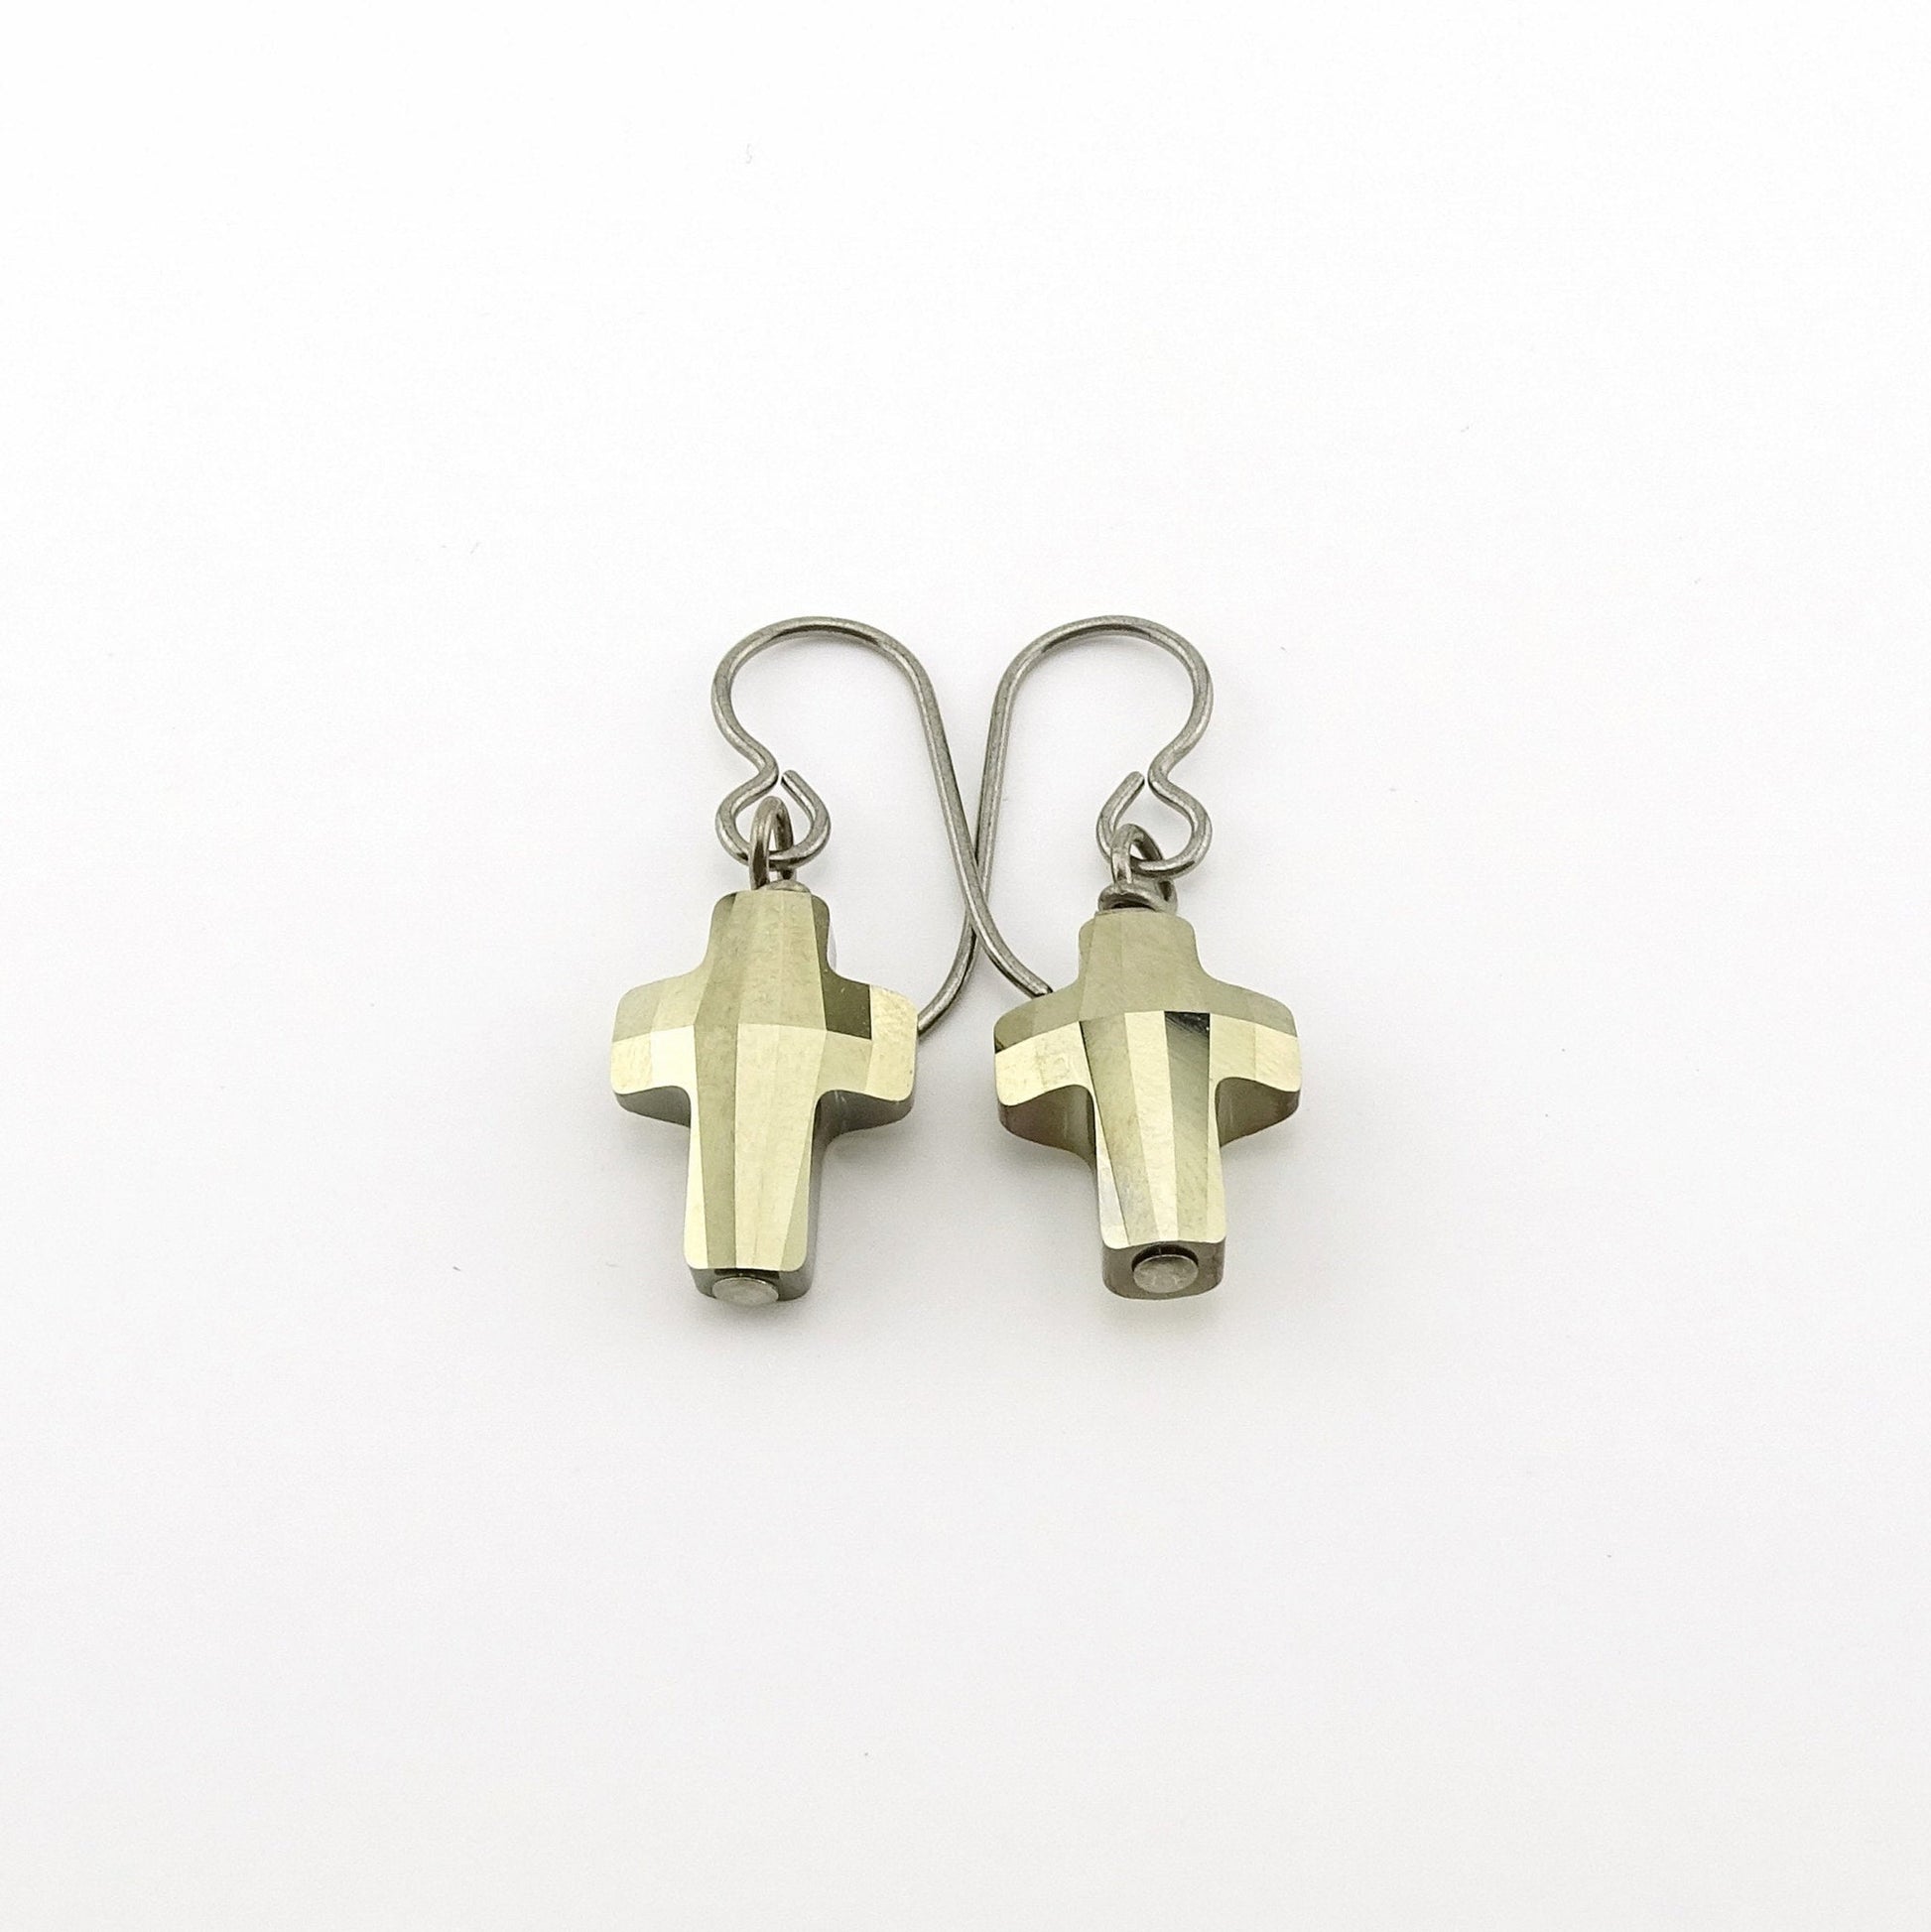 Metallic Gold Cross Nickel Free Earrings, Gold Swarovski Crystal Cross Niobium Earrings for Sensitive Ears, Hypoallergenic Titanium Earrings